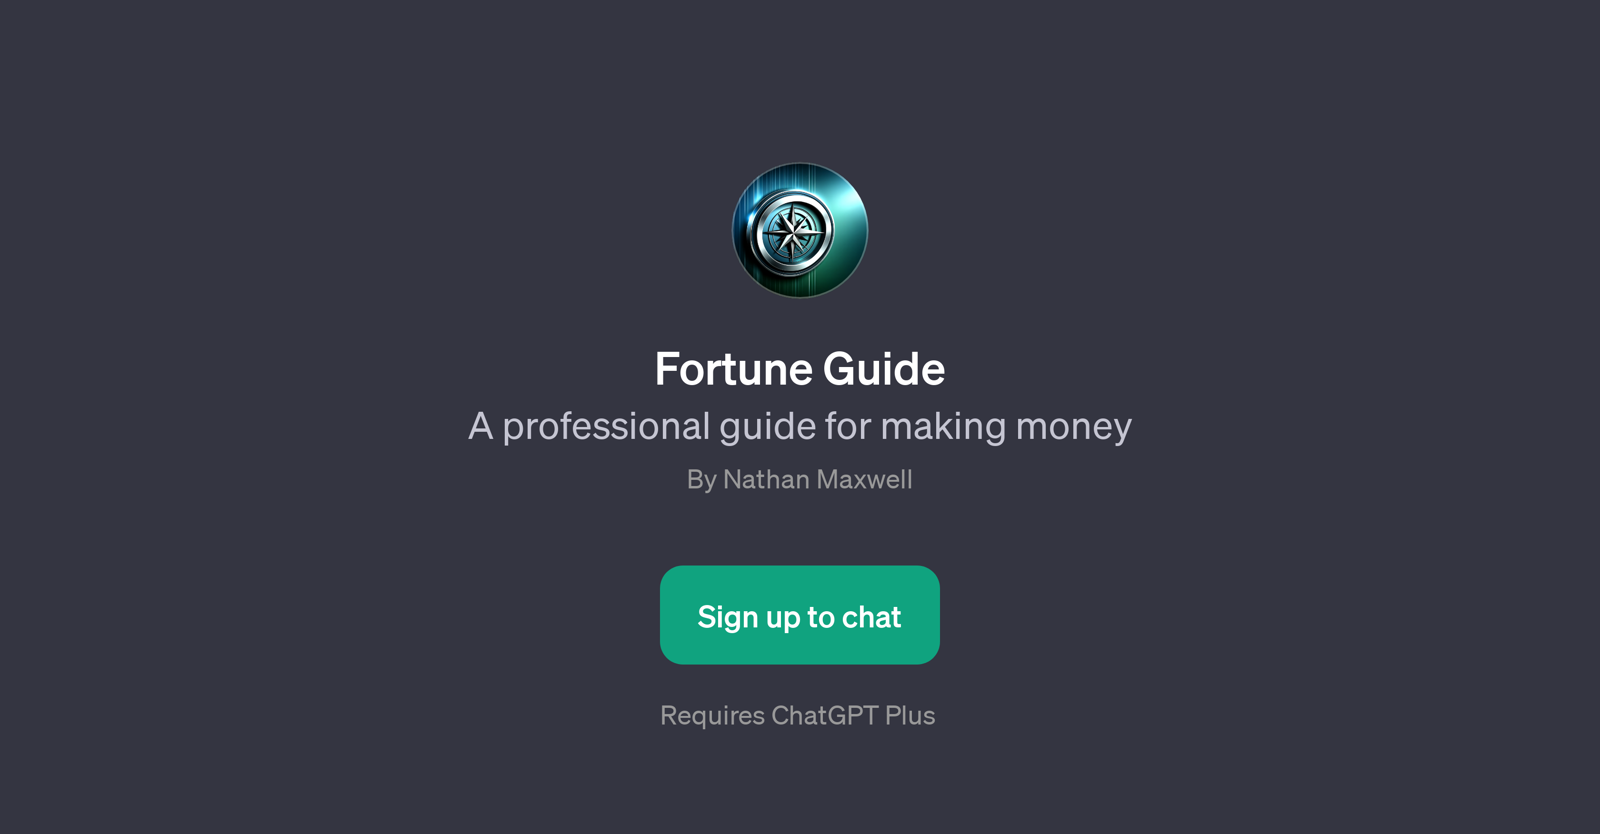 Fortune Guide website